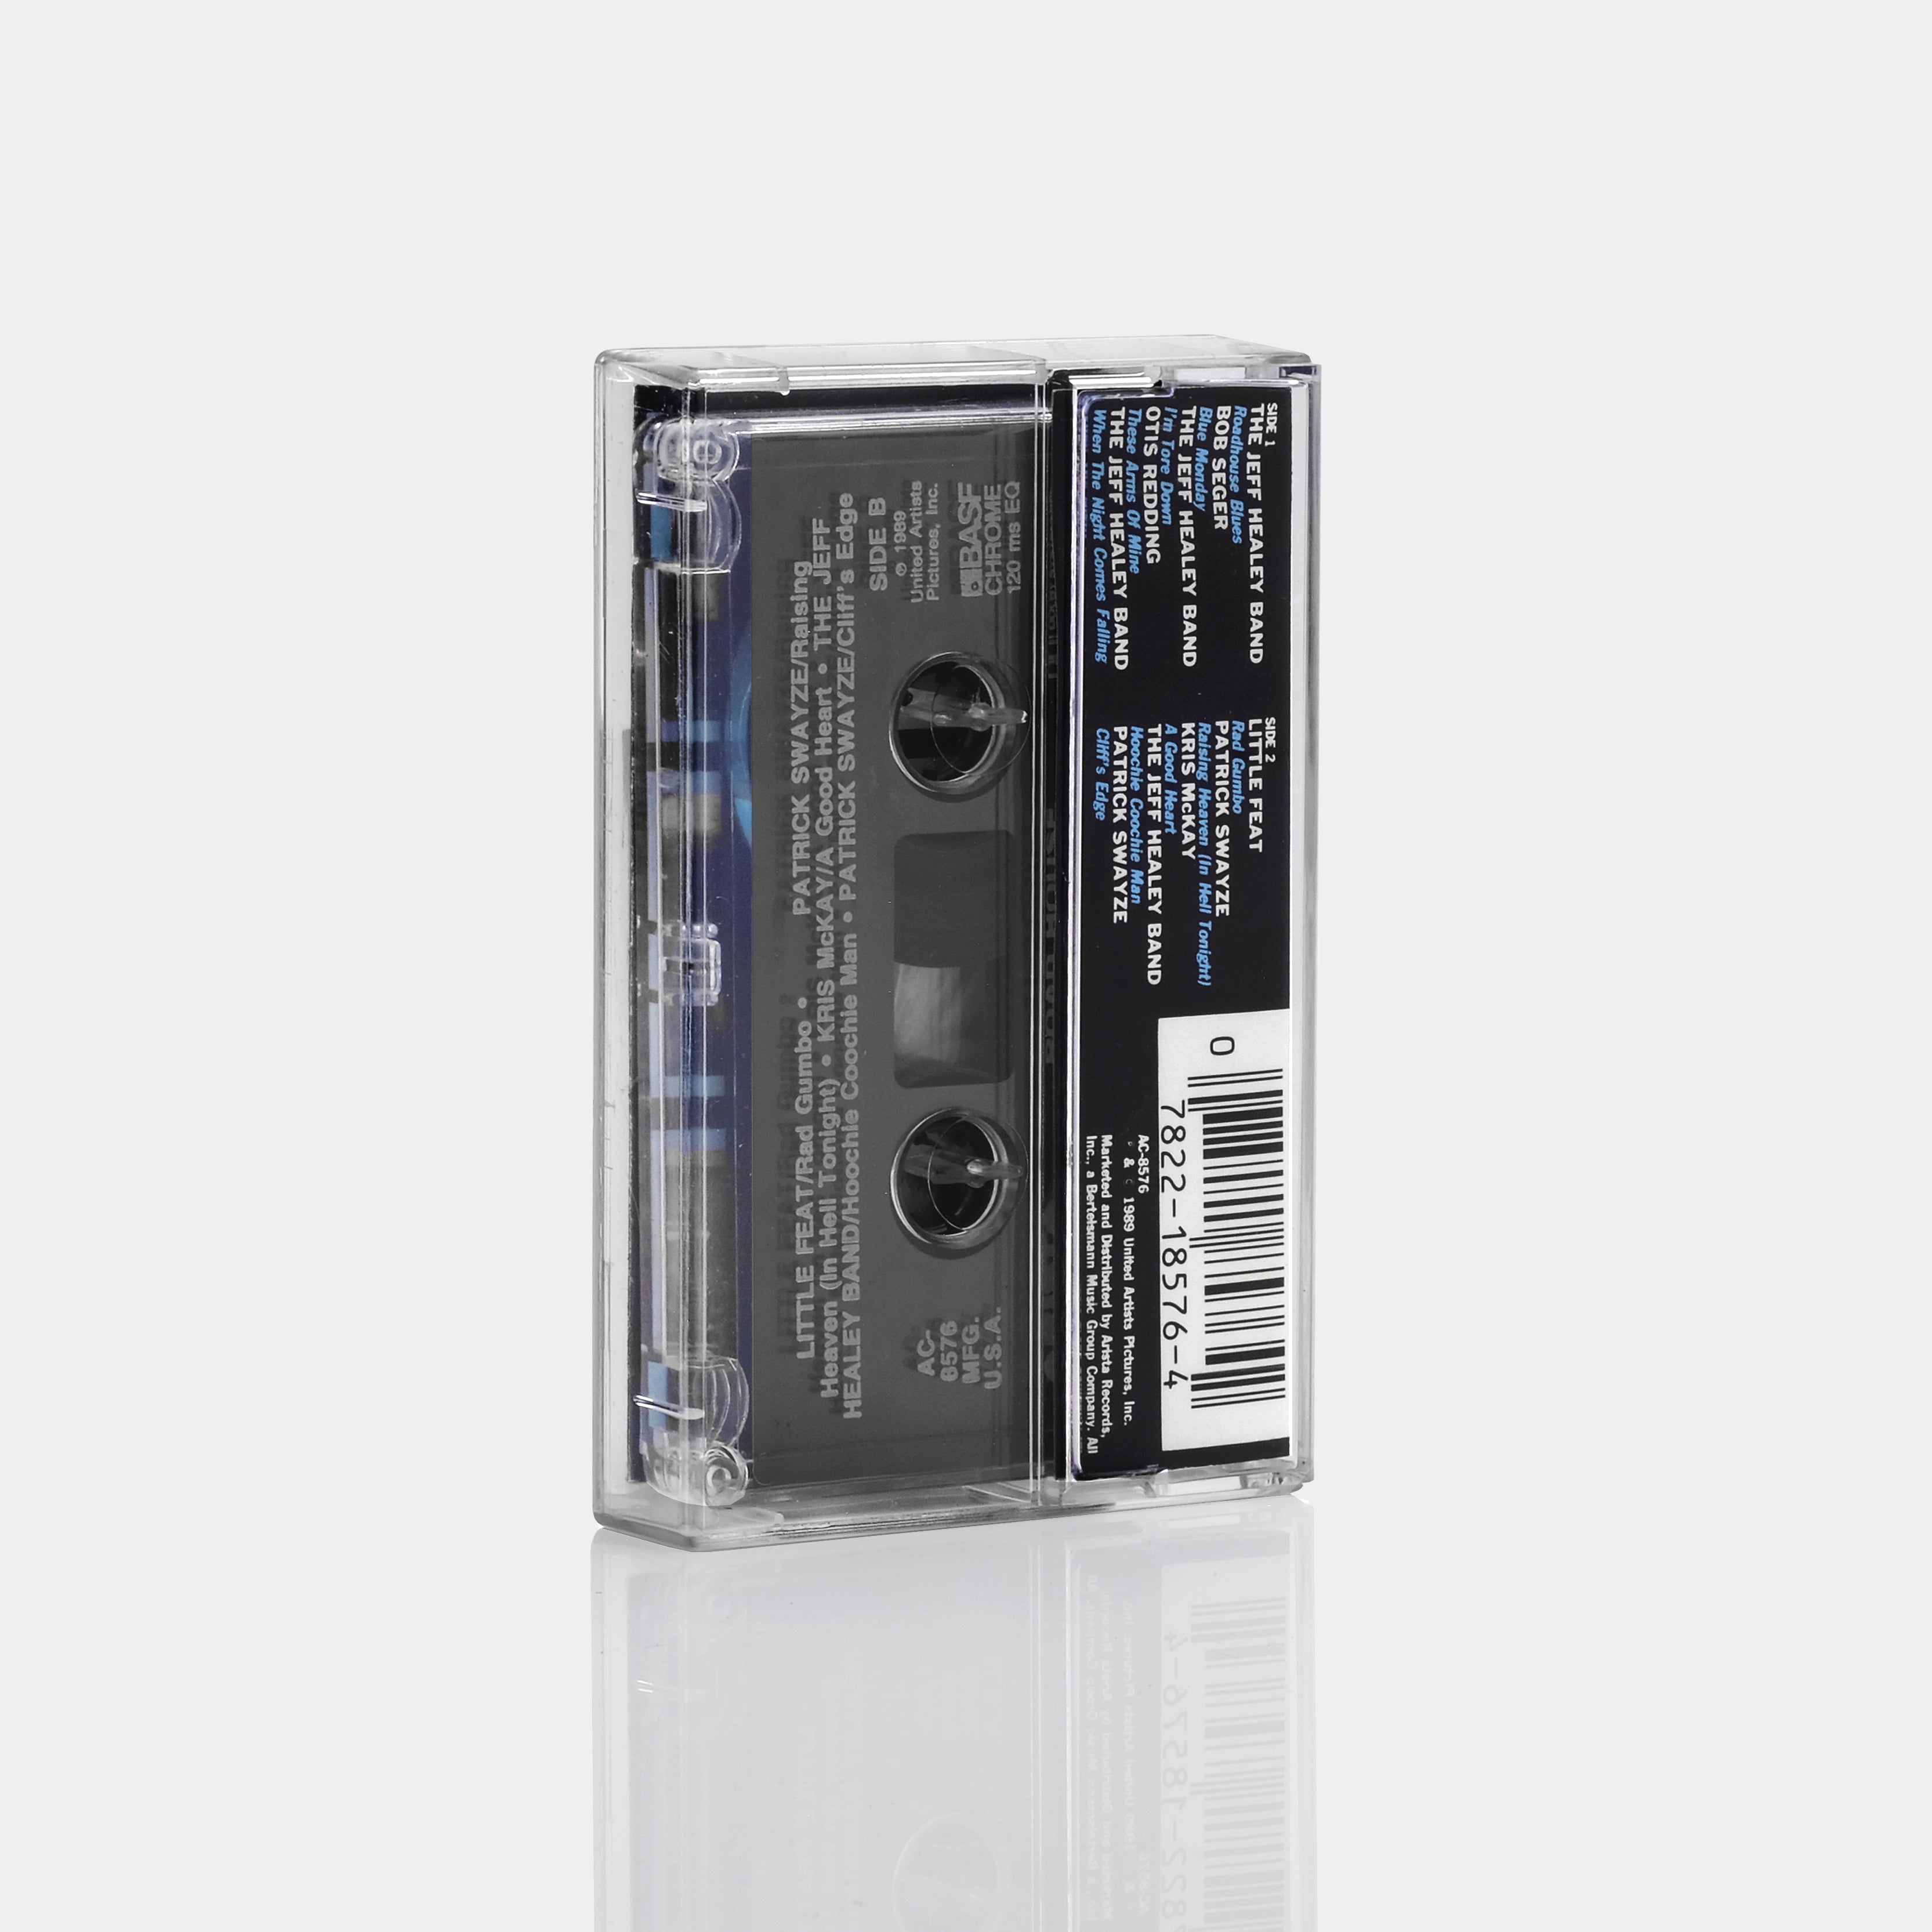 Road House (Original Motion Picture Soundtrack) Cassette Tape